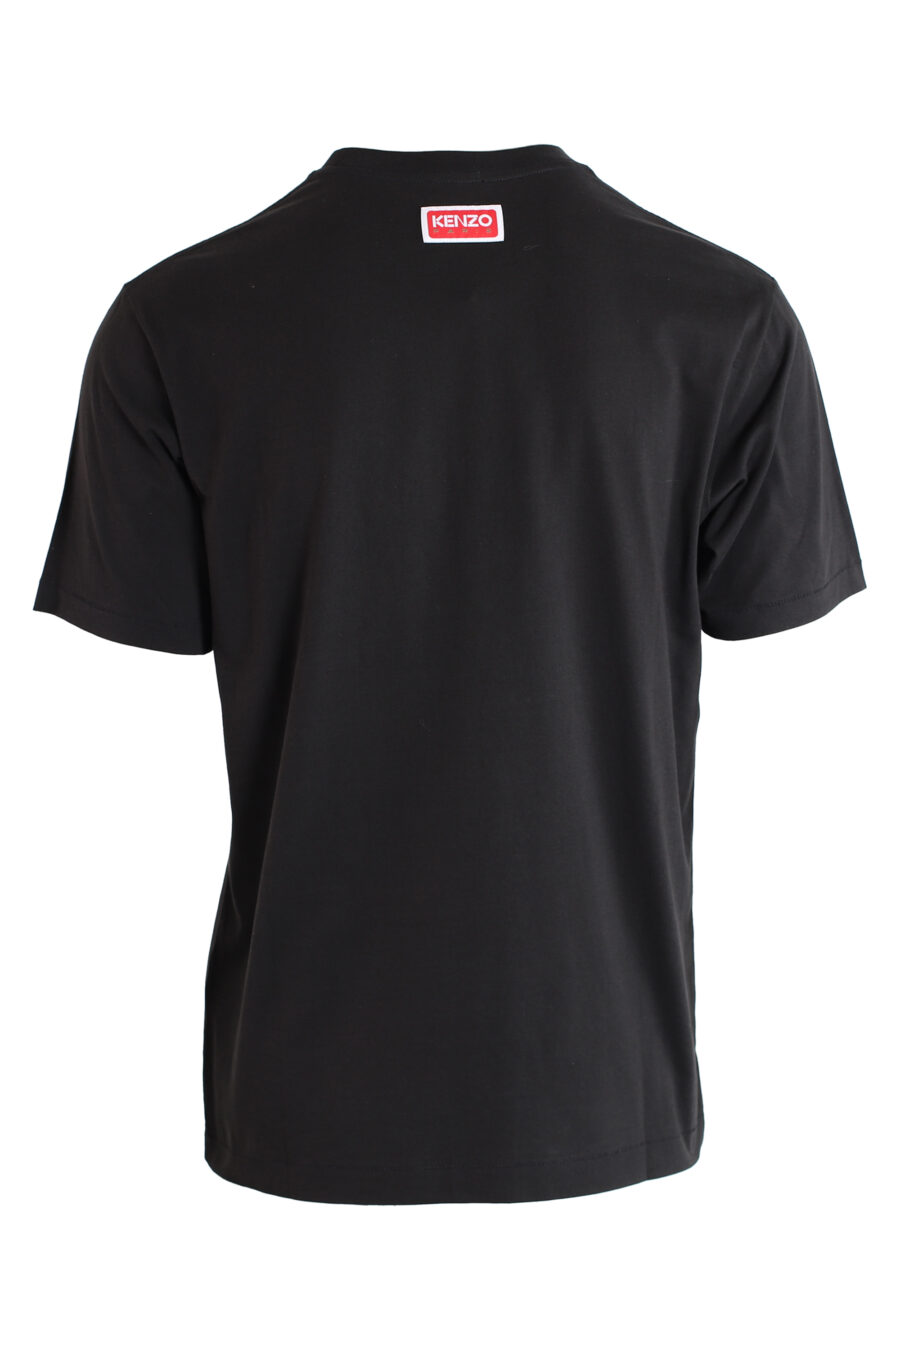 Camiseta negra con logo "flower" - IMG 3175